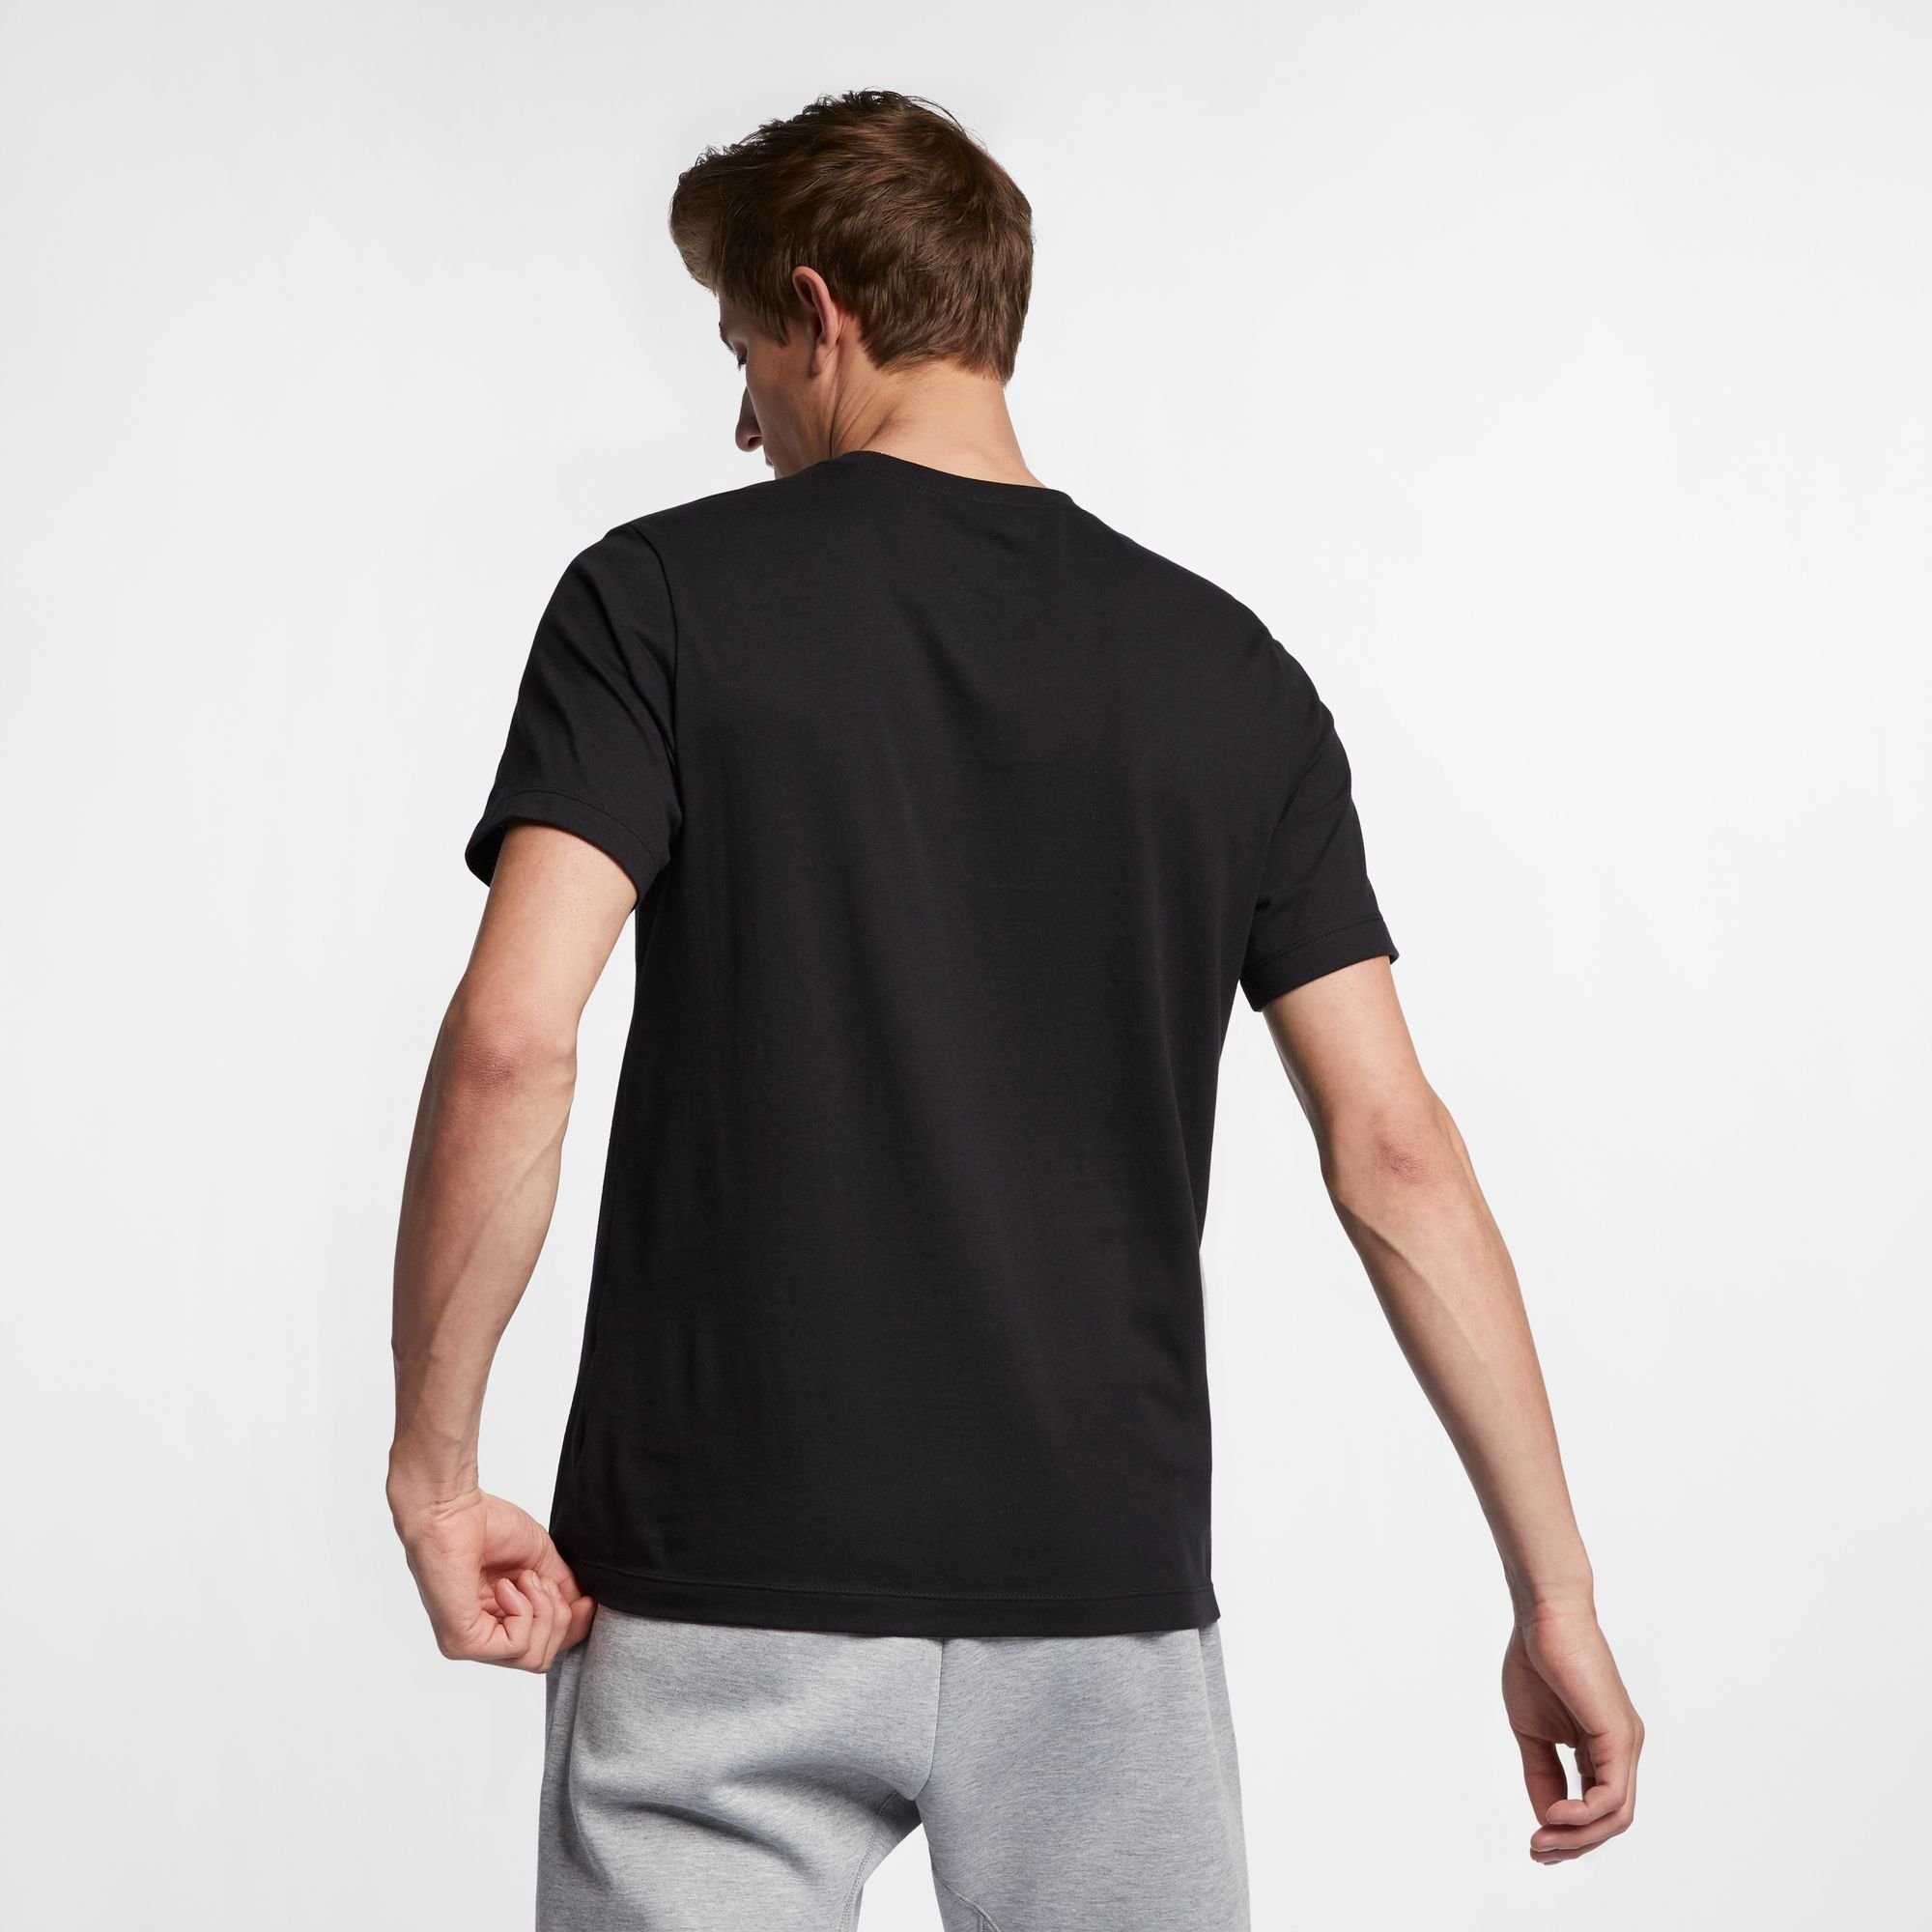 JDI T-SHIRT MEN'S Nike T-Shirt schwarz-weiß Sportswear